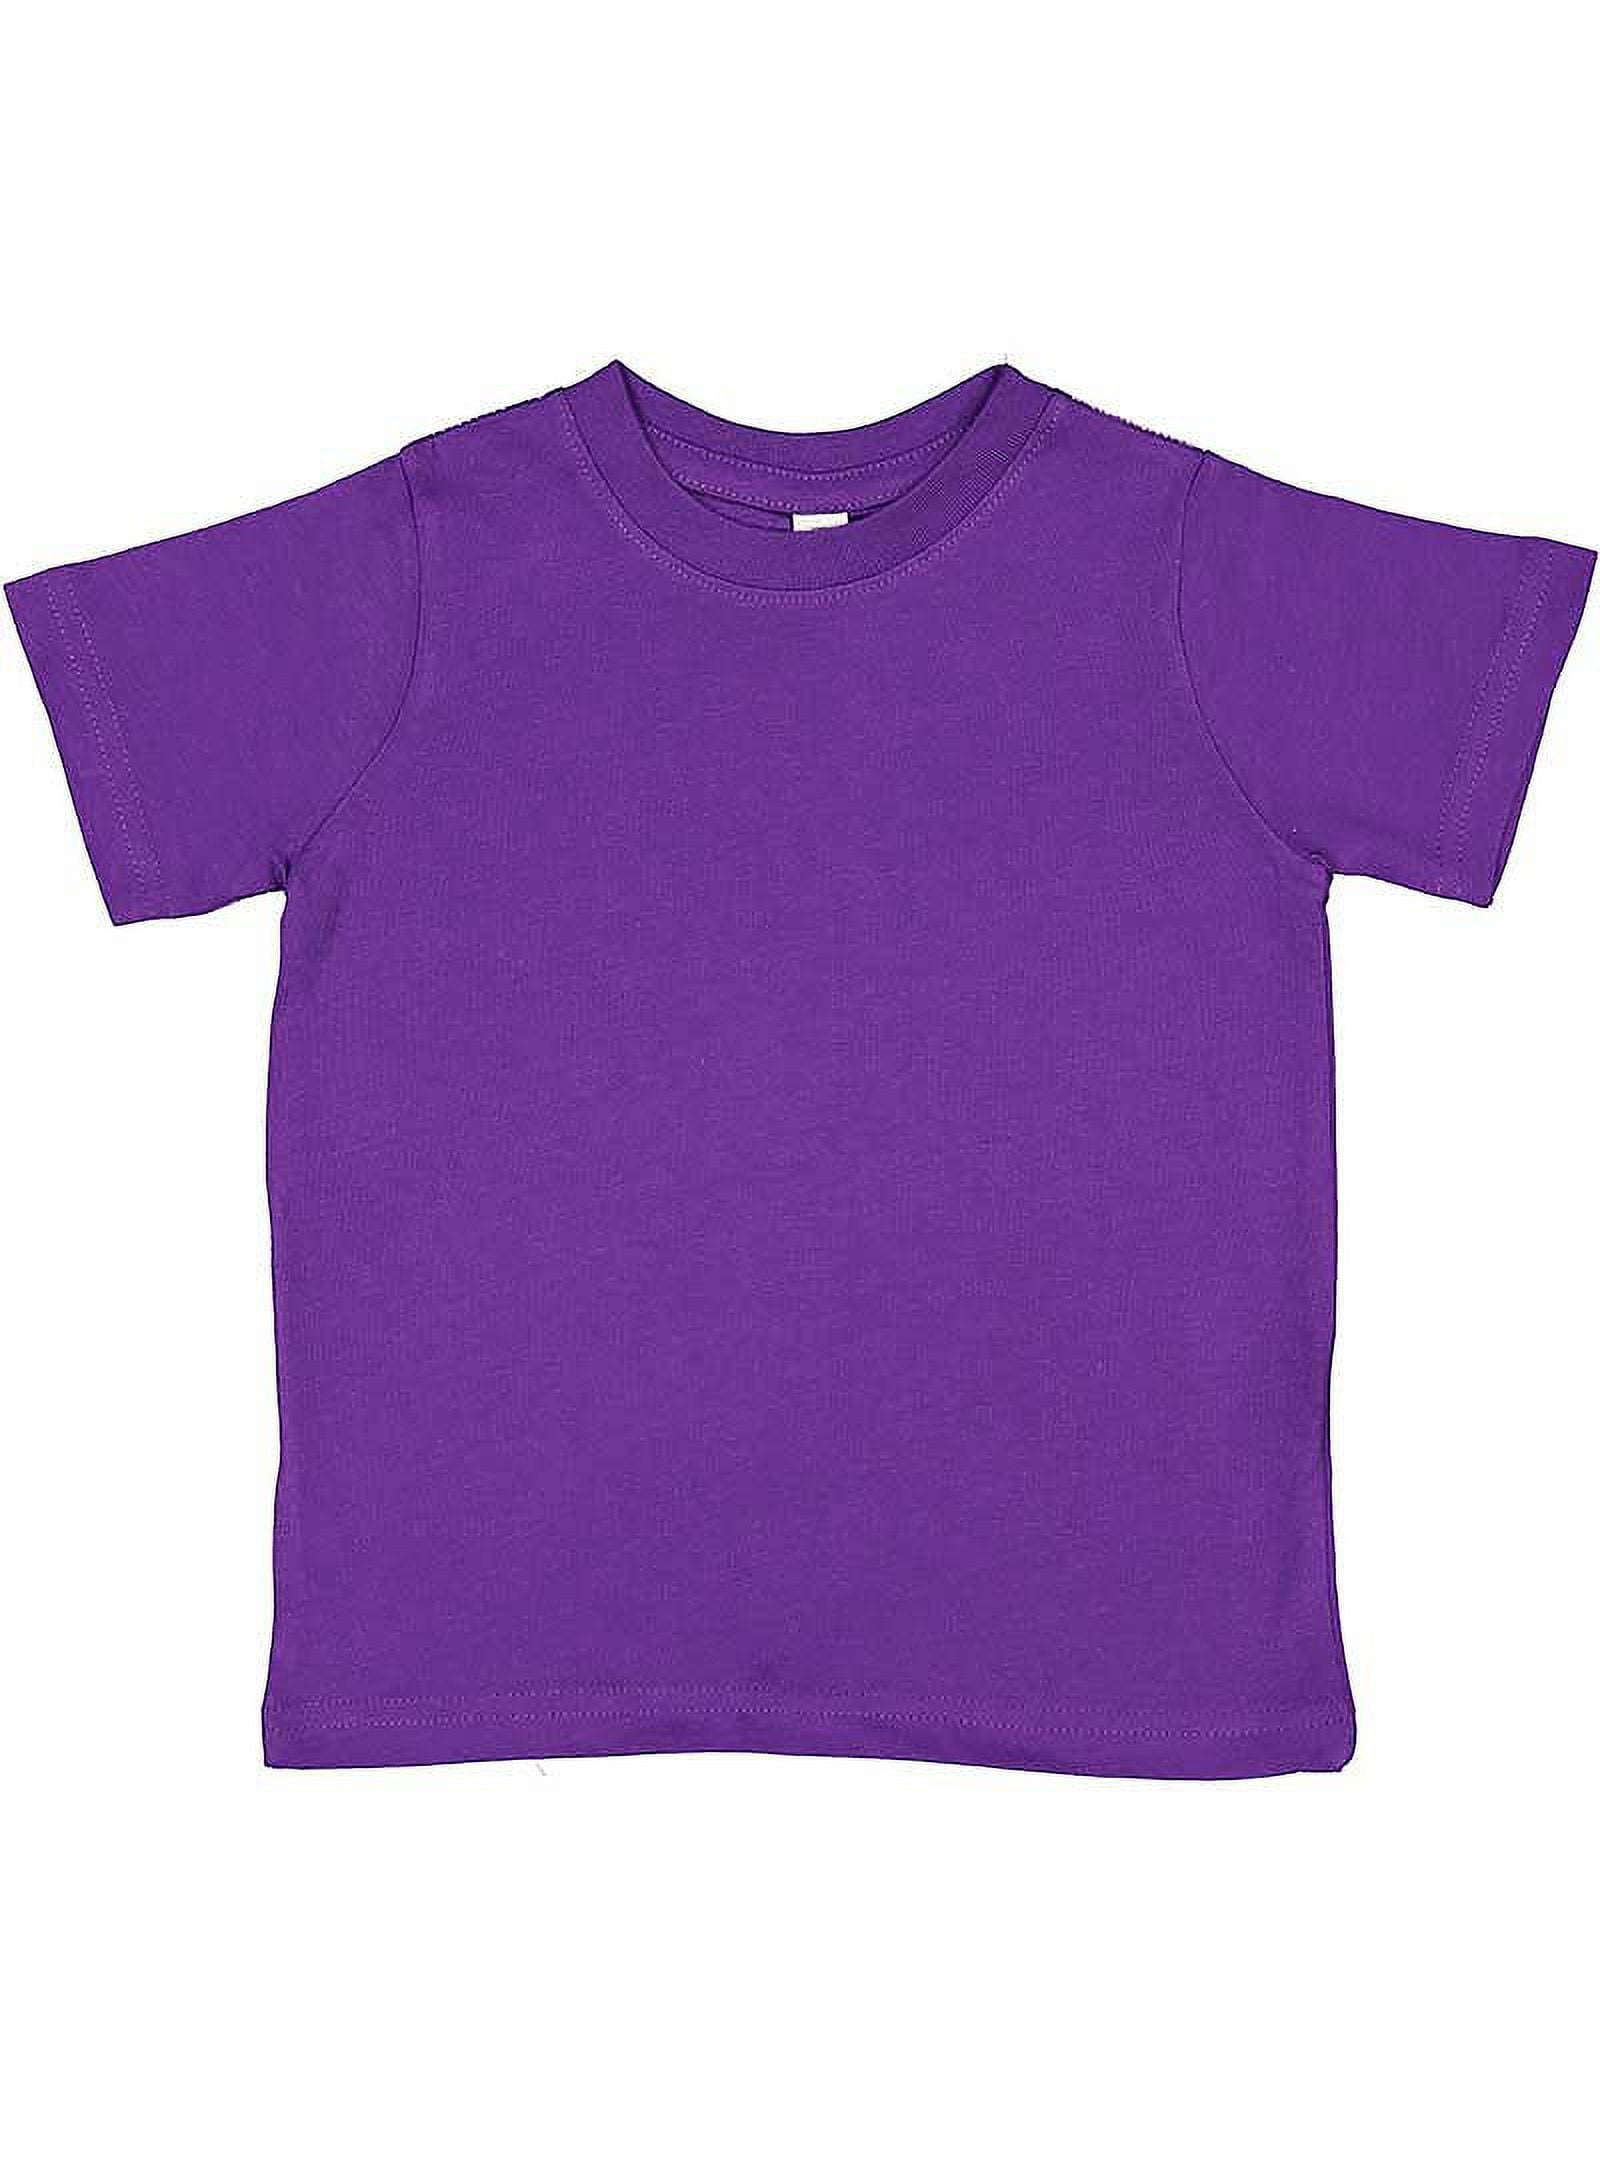 Toddler Fine Jersey T-Shirt PRO PURPLE 2T